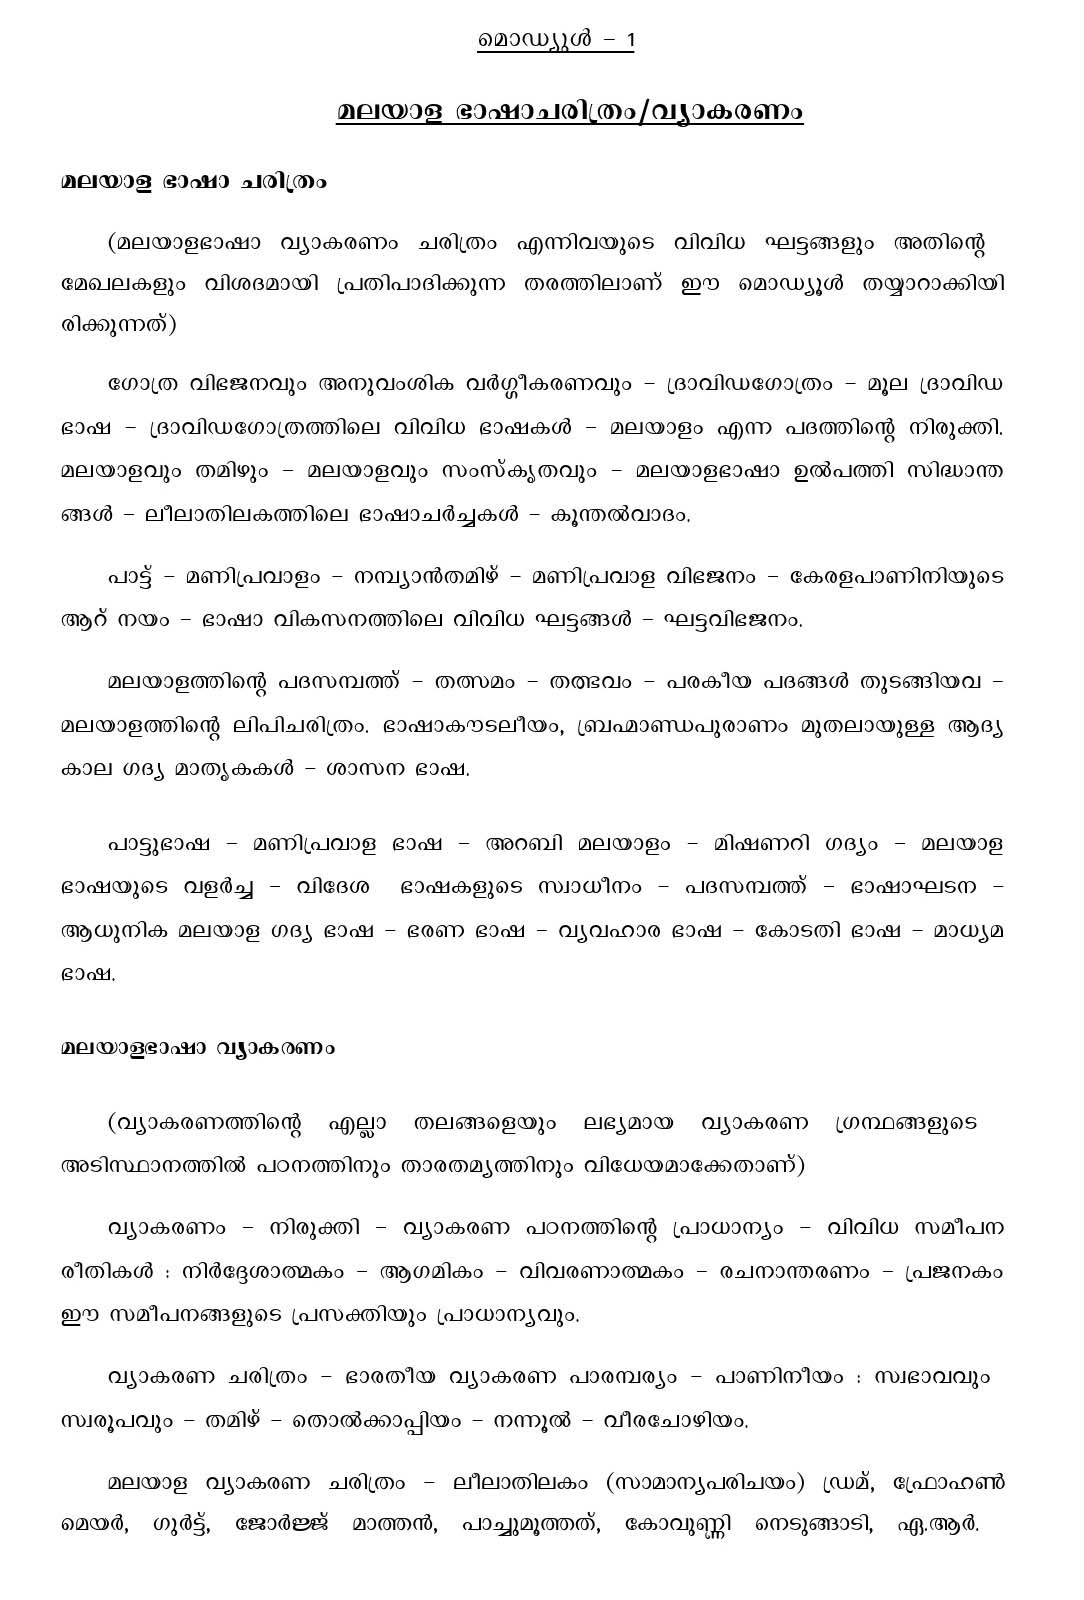 Kerala PSC Assistant Professor Malayalam Exam Syllabus - Notification Image 1